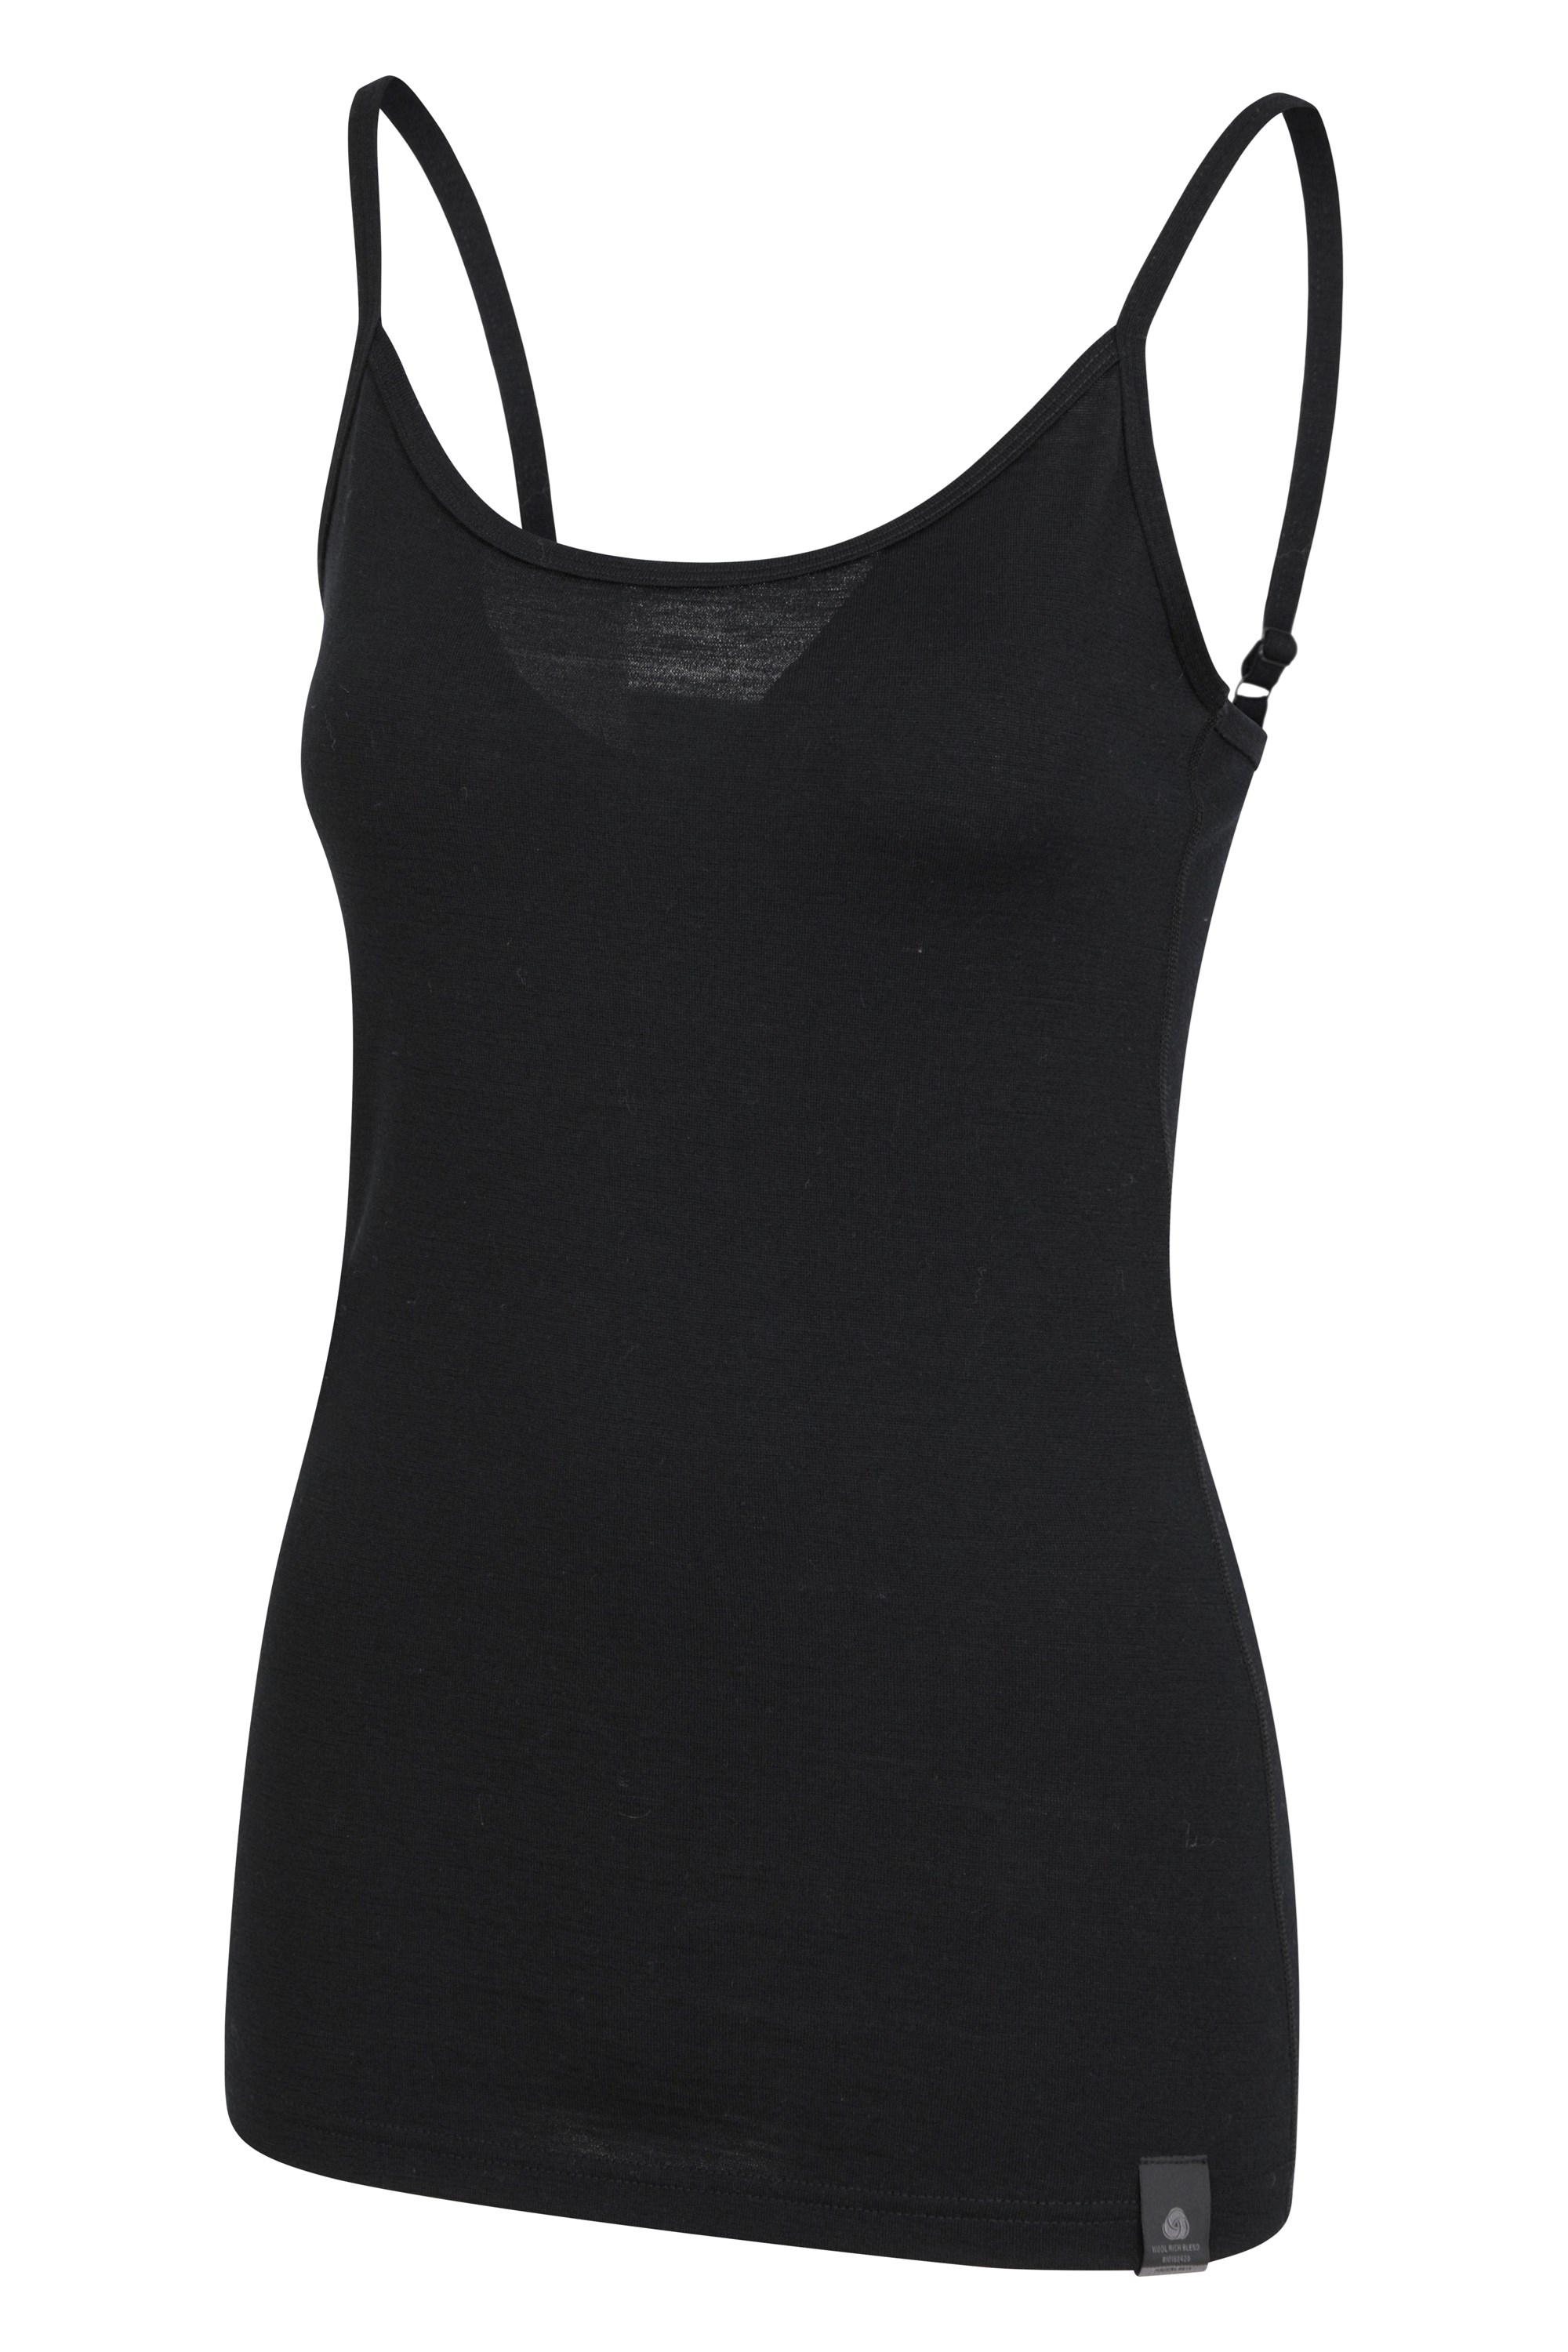 AUQCO Women's Camisole Cami Tank Top, Loose Fit, Black, Size XL